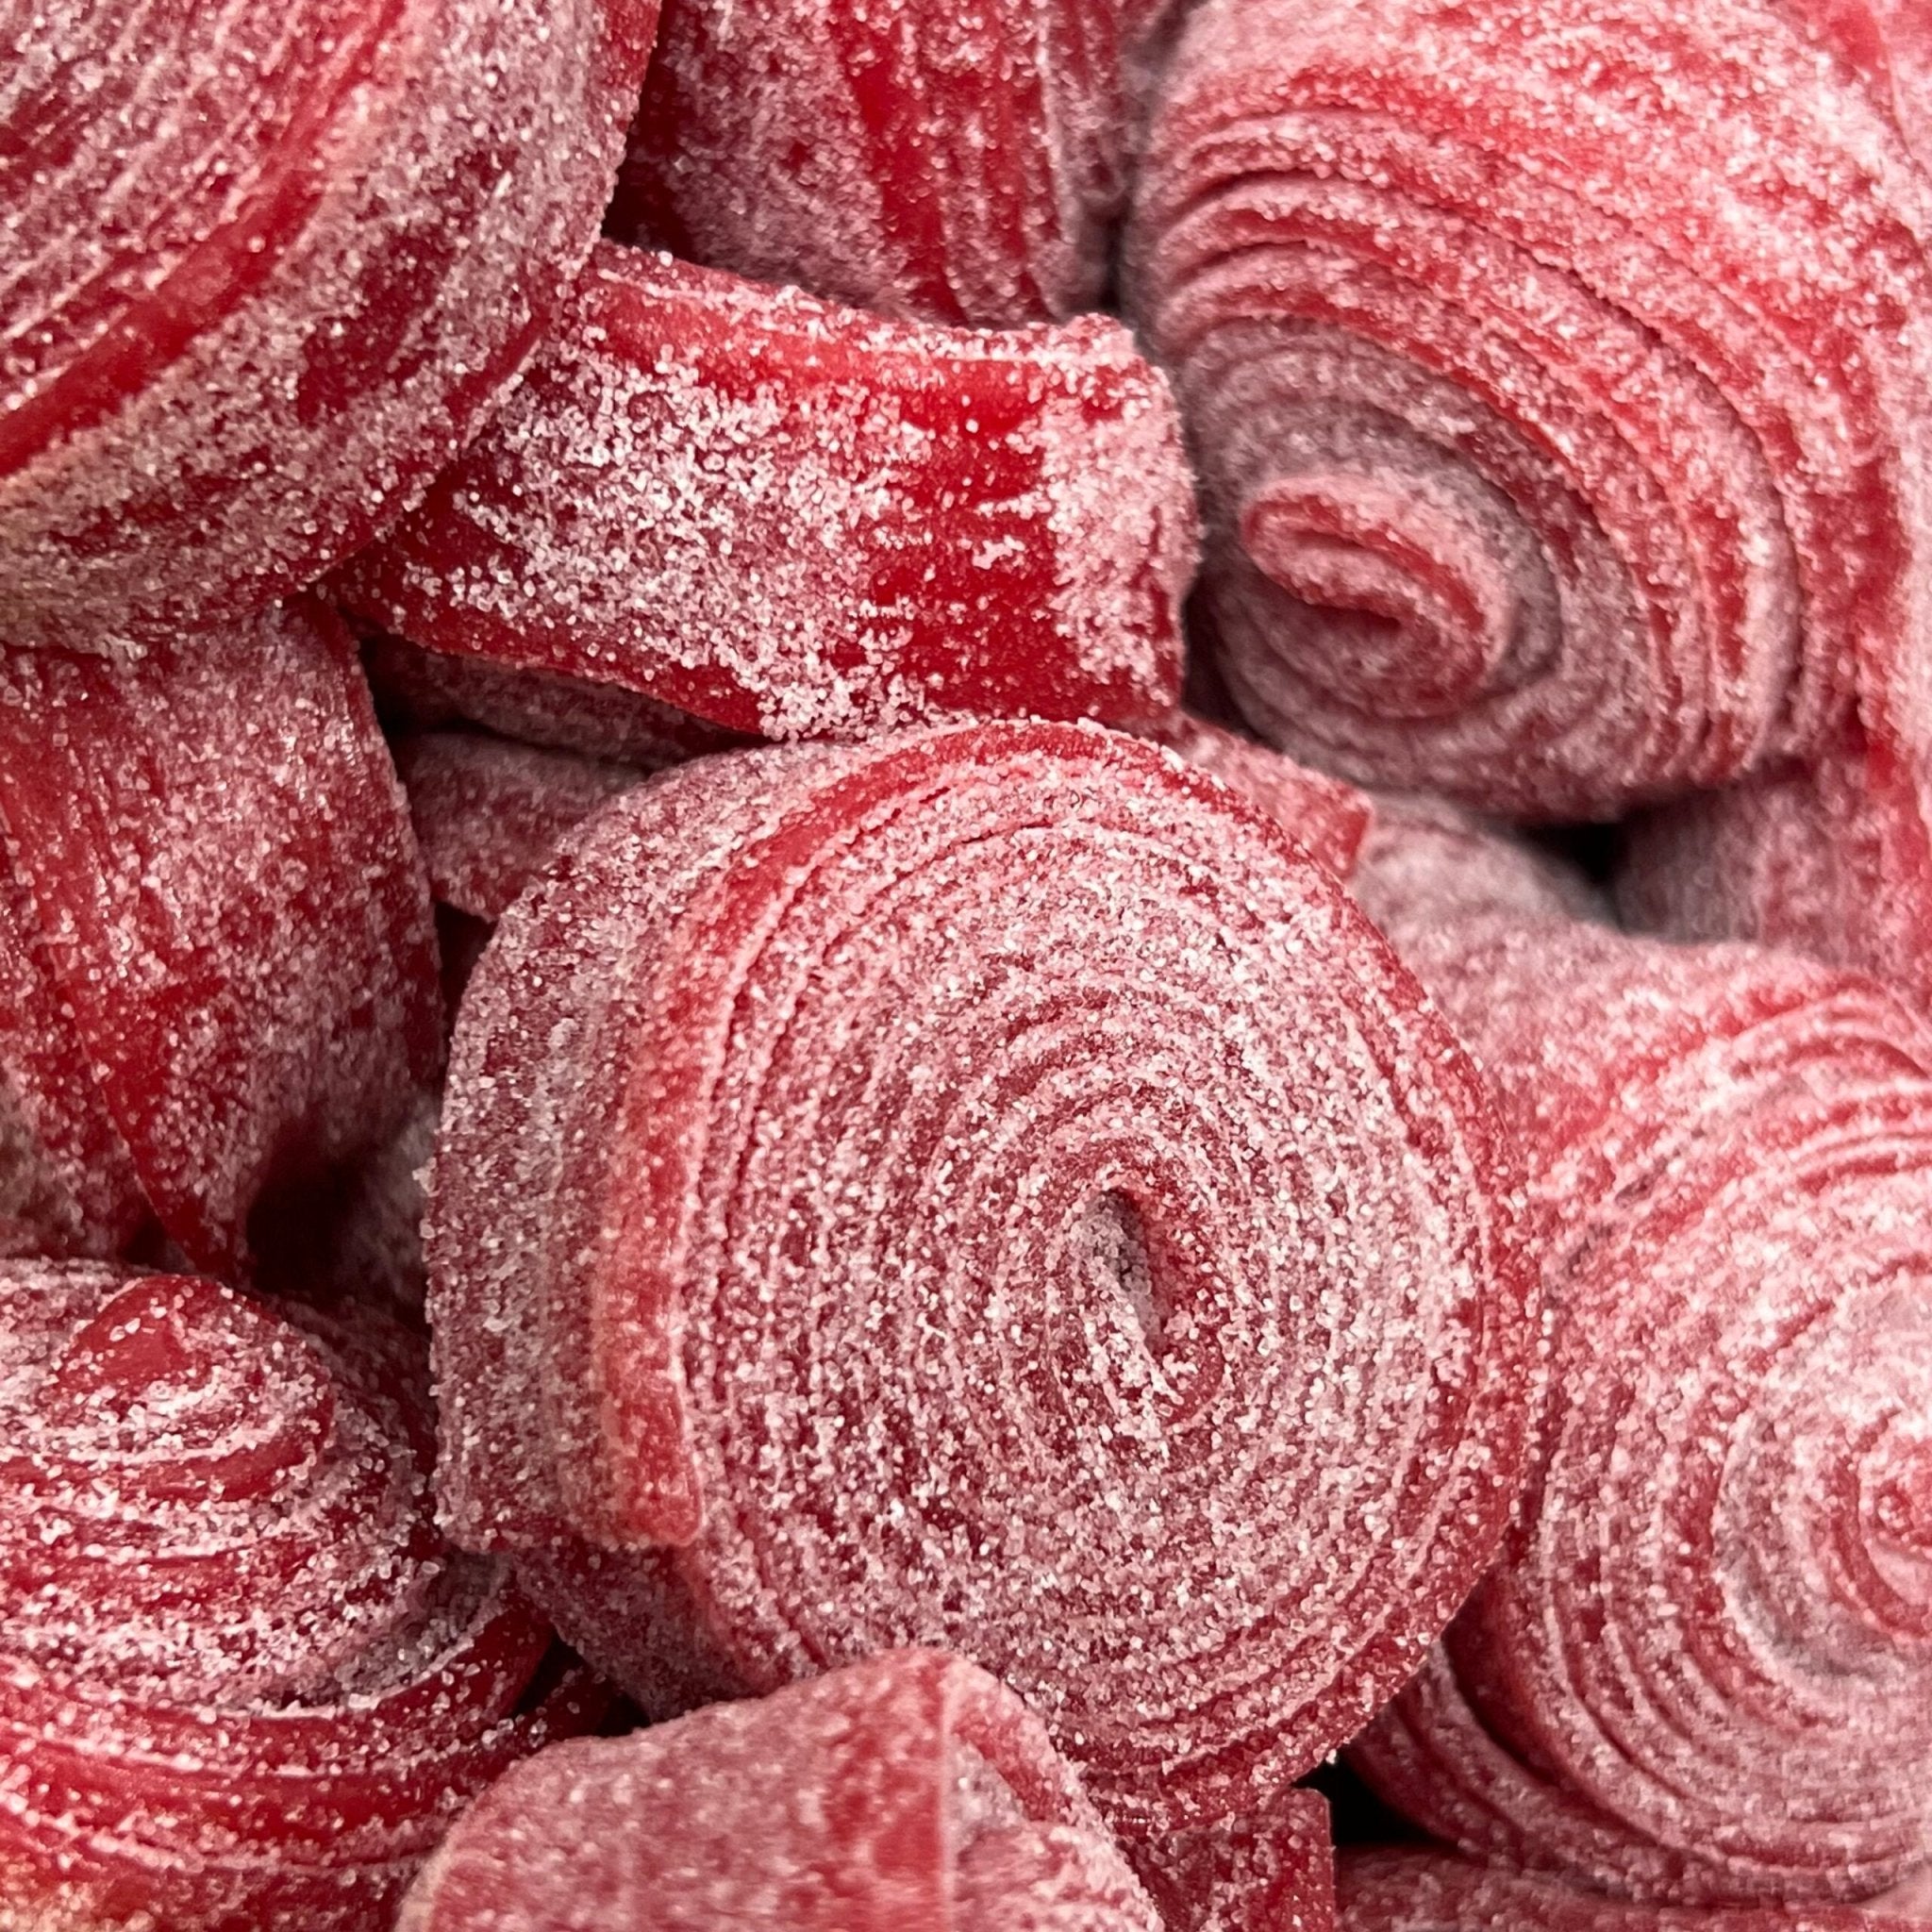 Red Belt Rolls - Dream Candy